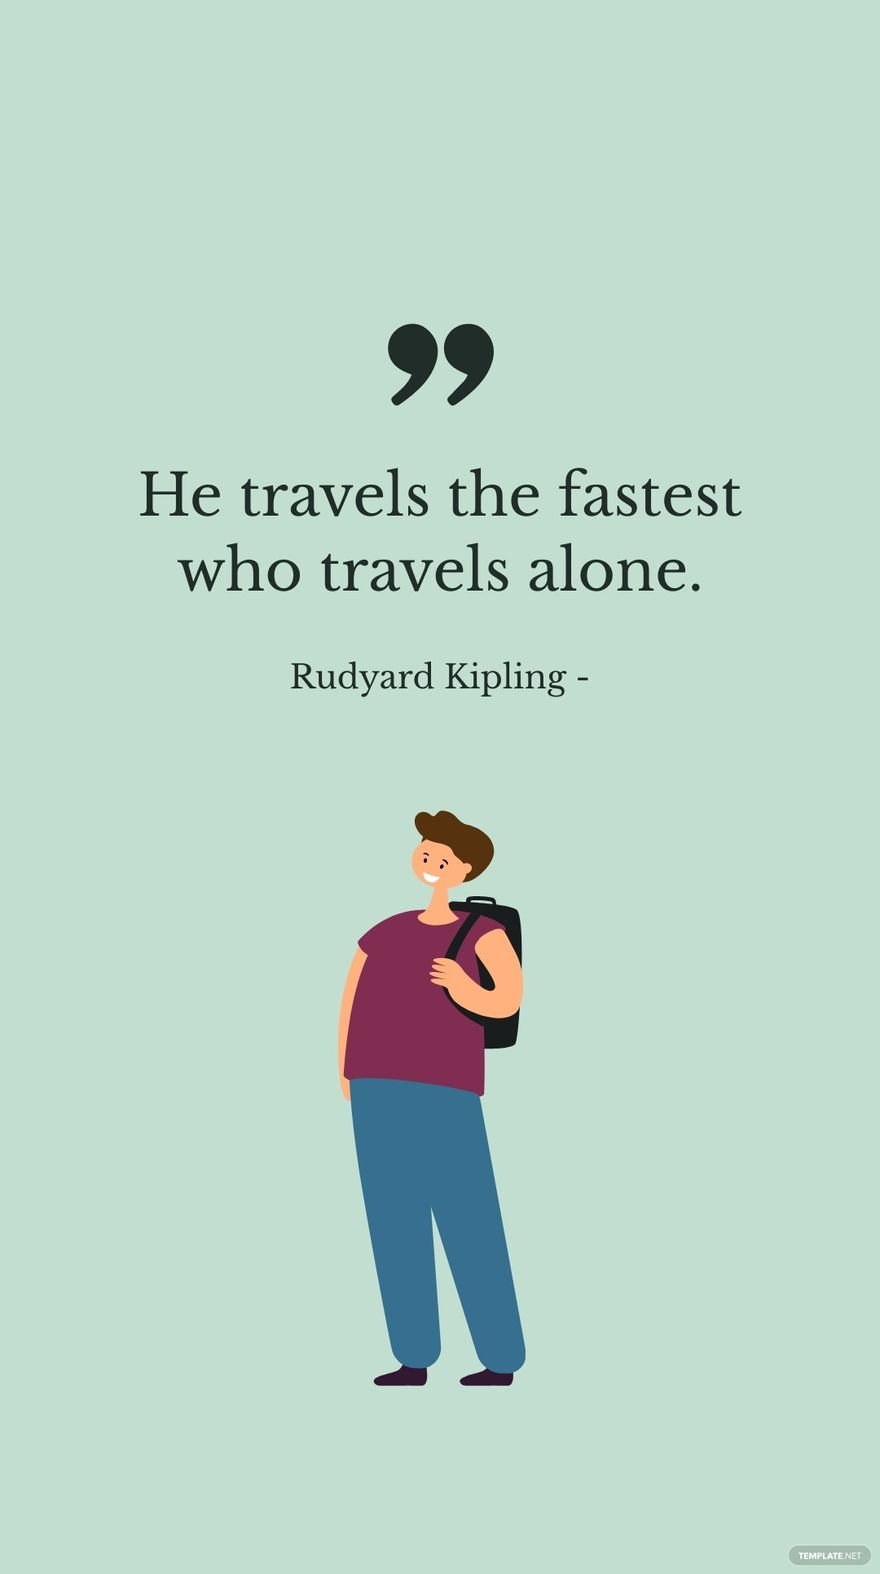 Rudyard Kipling - He travels the fastest who travels alone. in JPG